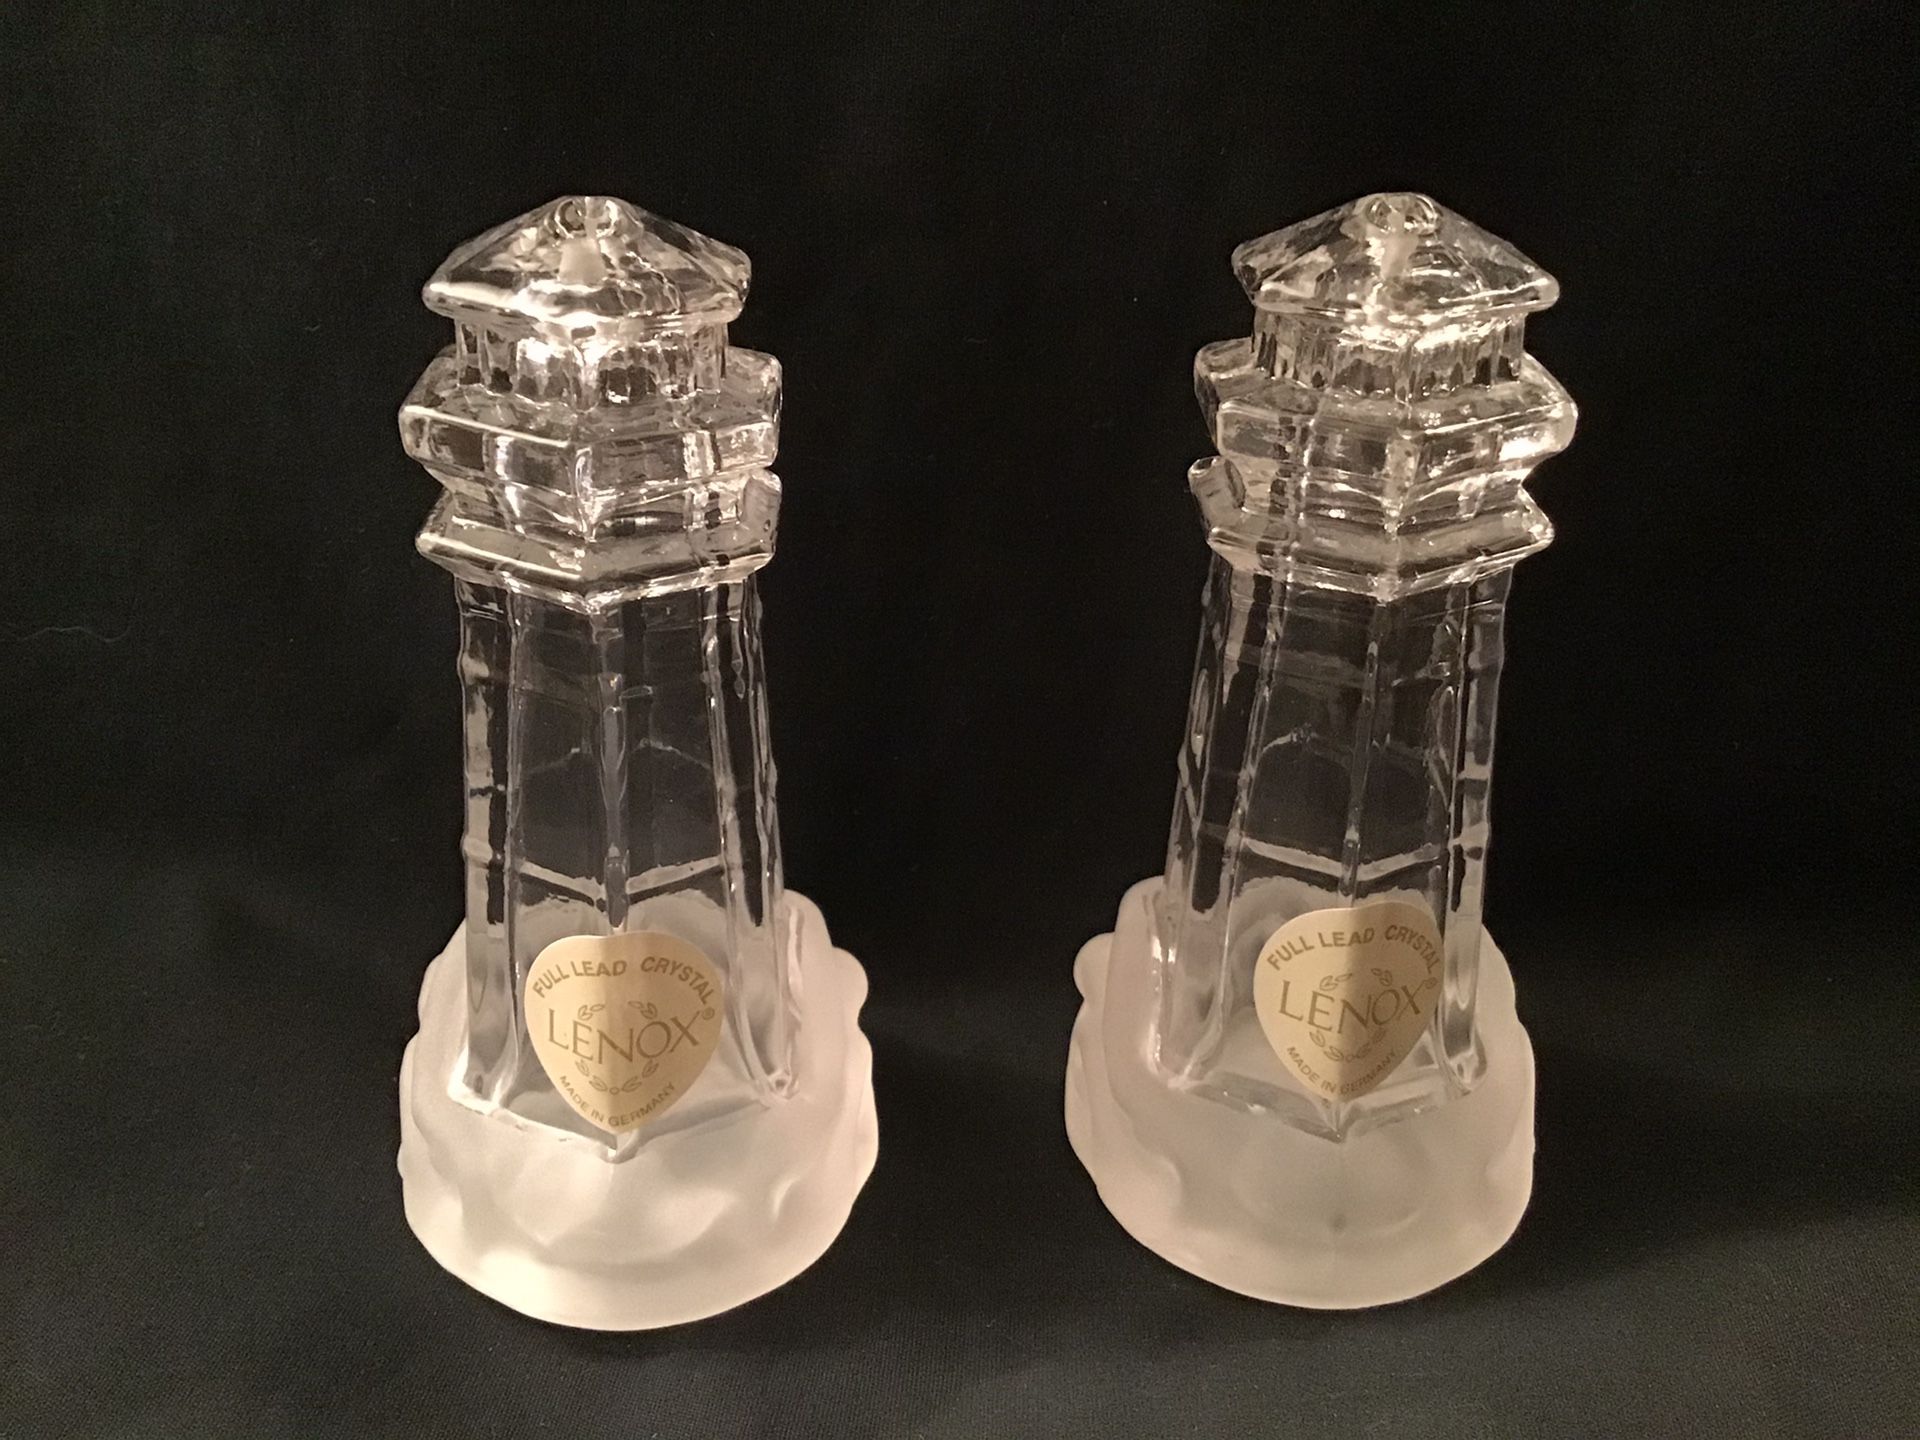 Lenox Crystal Salt/Pepper Shakers